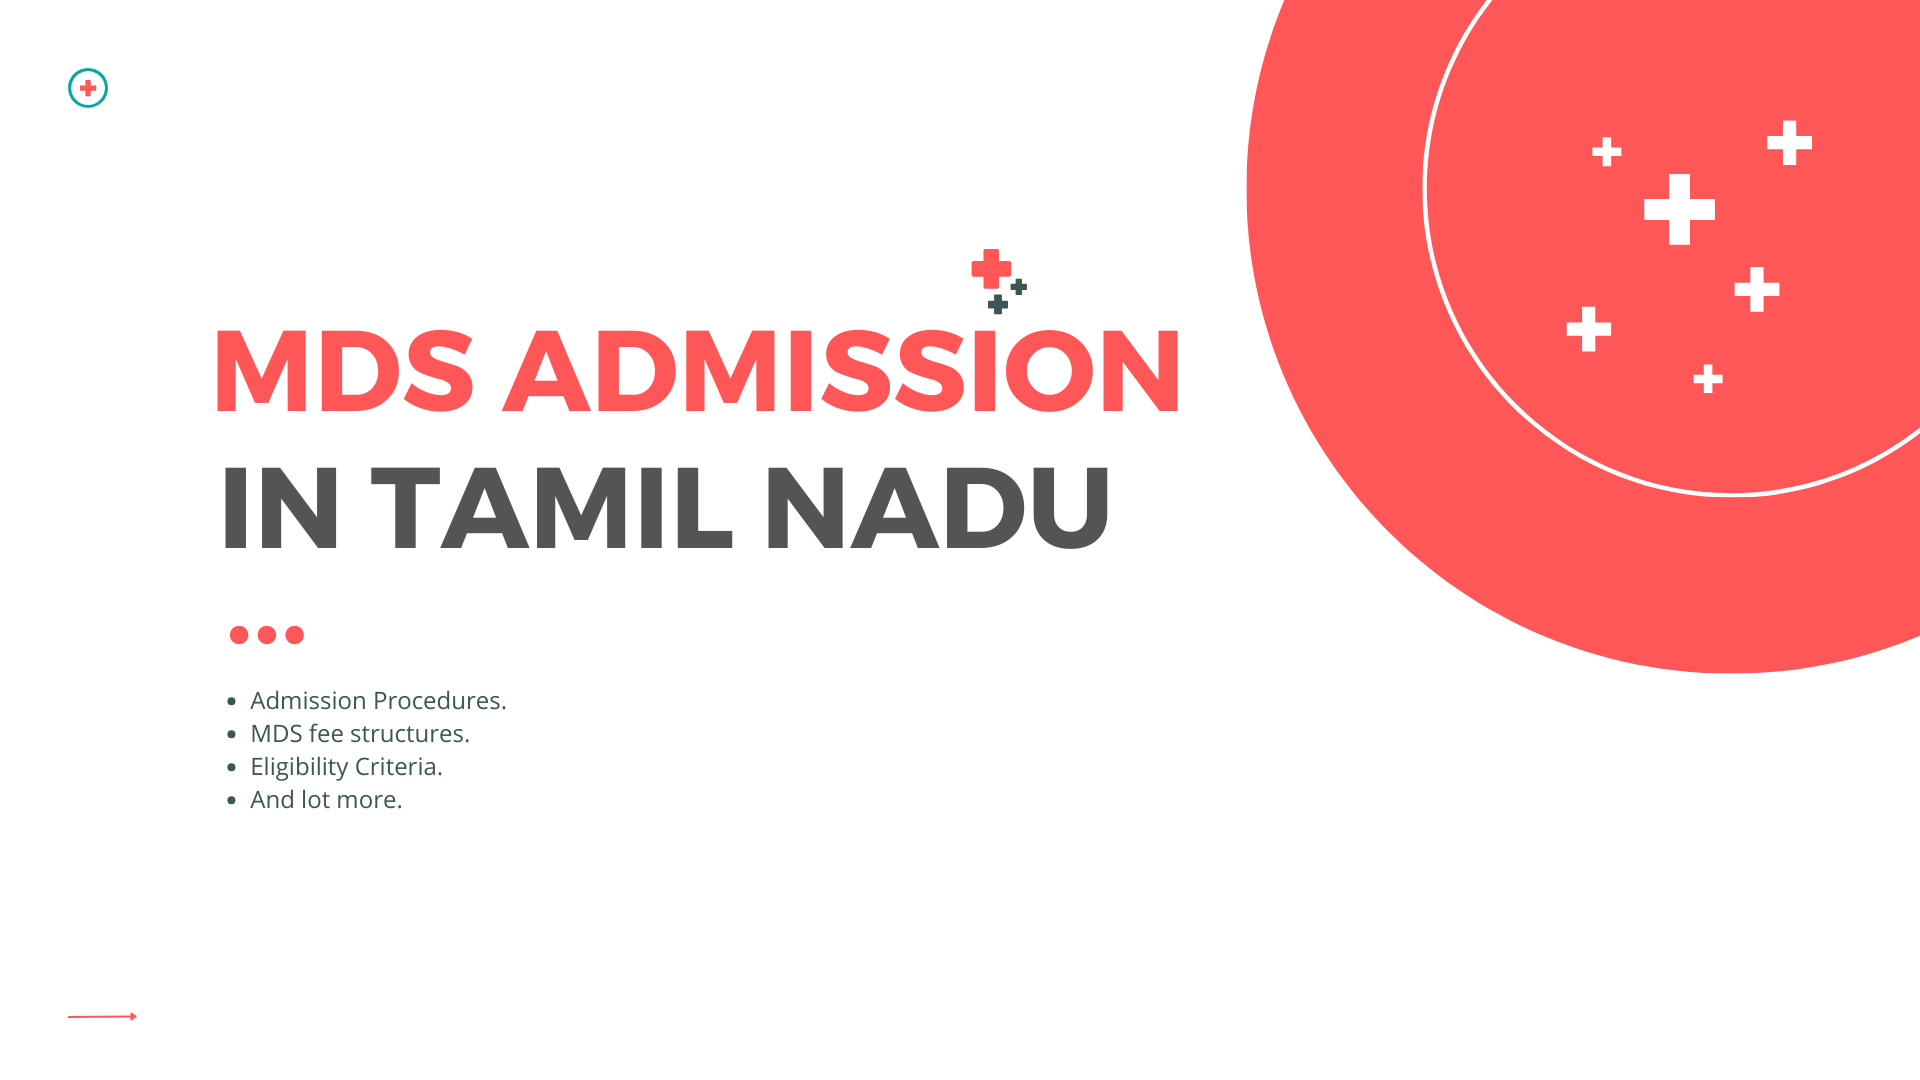 MDS Admission in Tamil Nadu